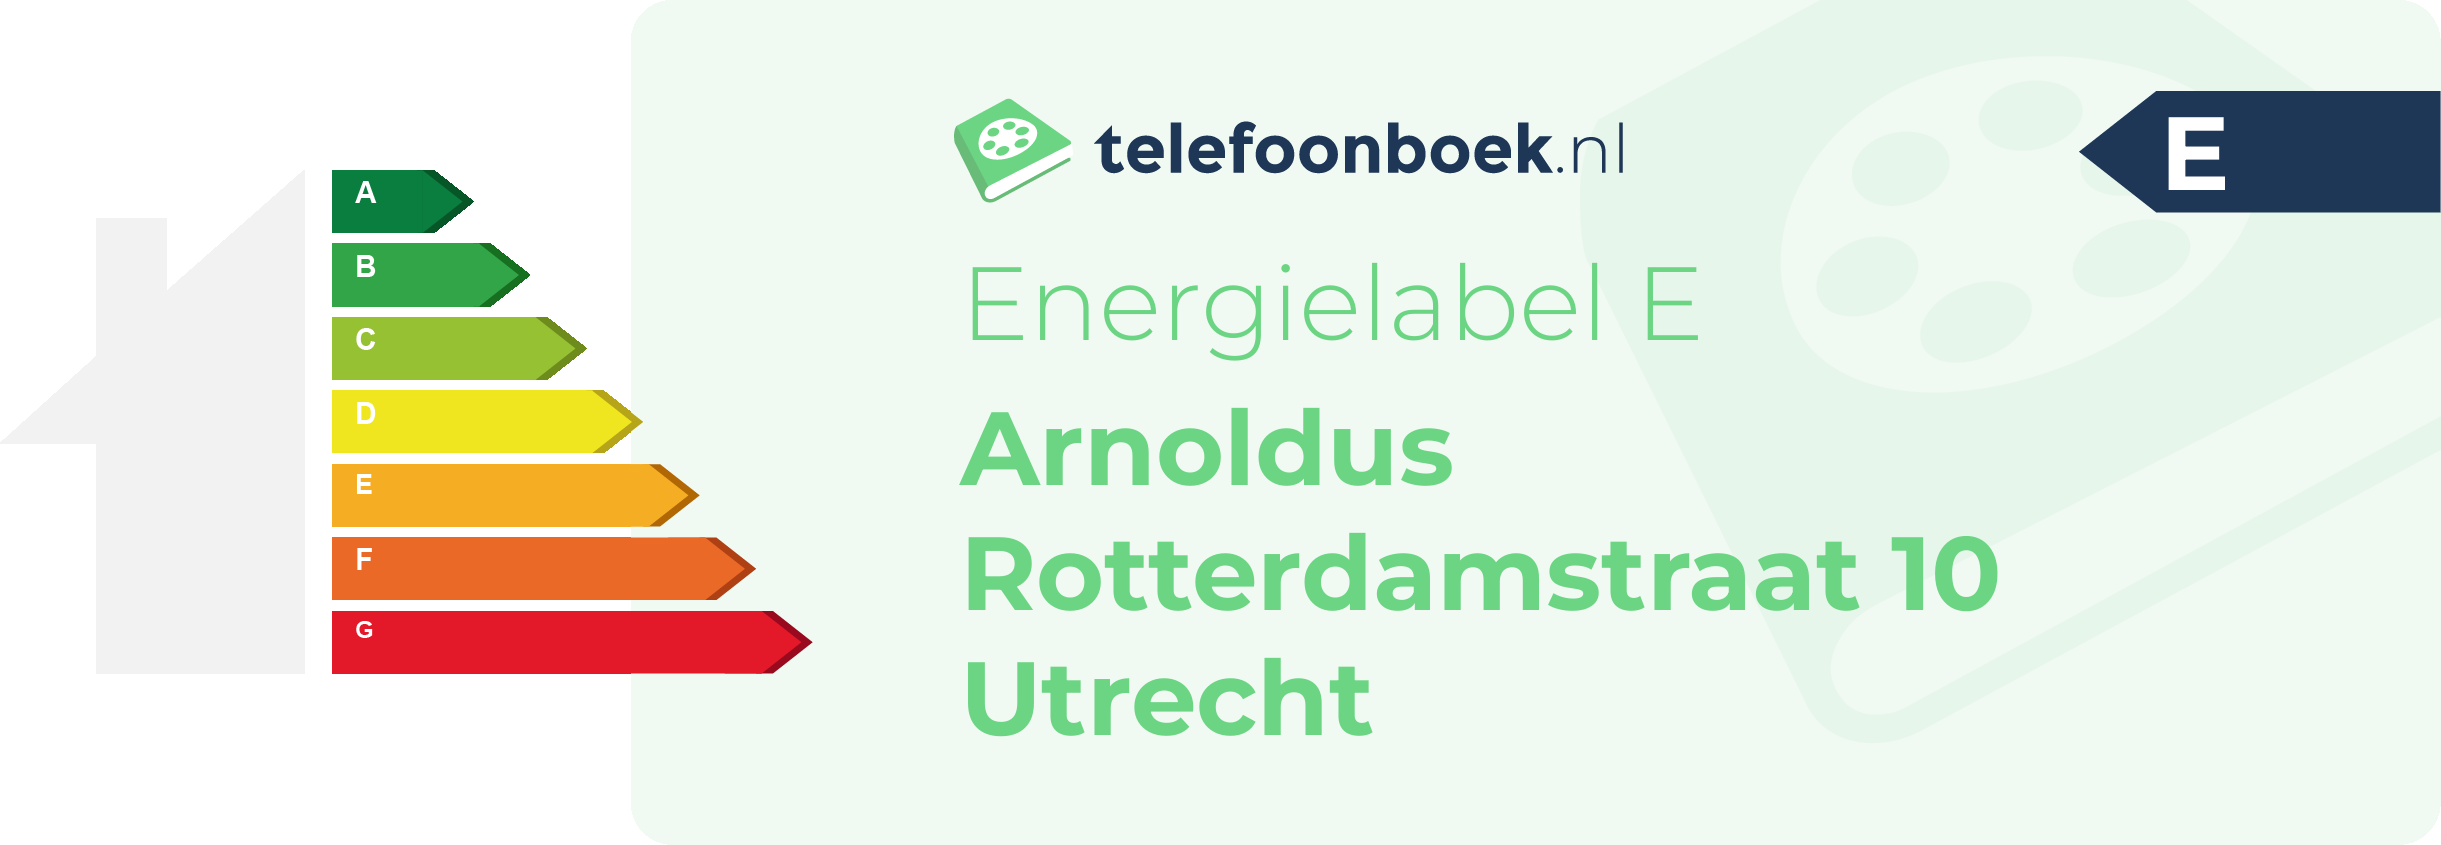 Energielabel Arnoldus Rotterdamstraat 10 Utrecht